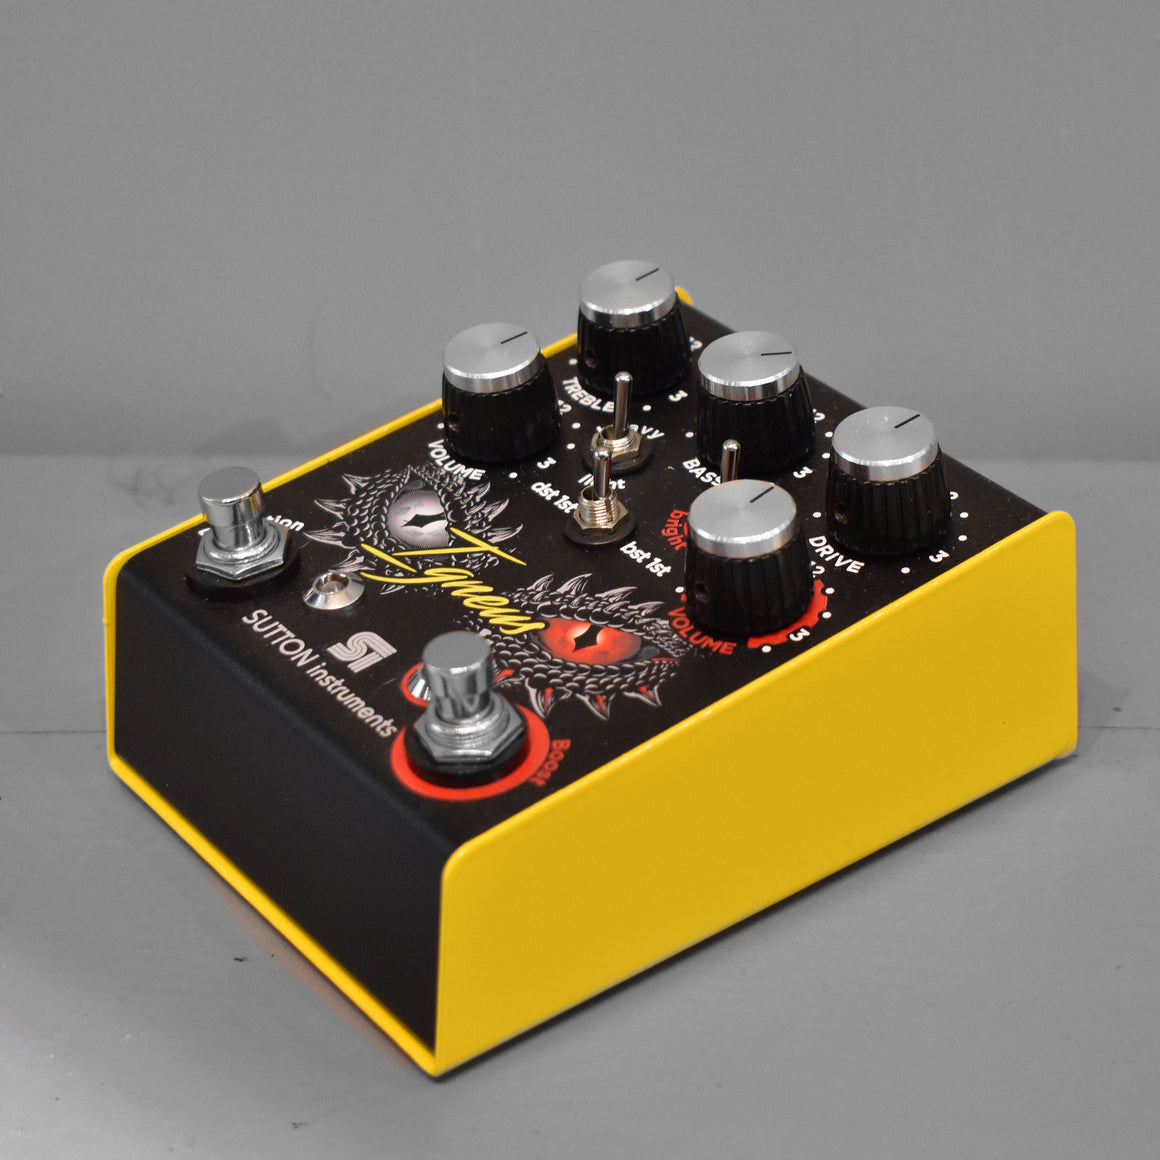 Sutton Instruments Igneus Distortion & Boost pedal